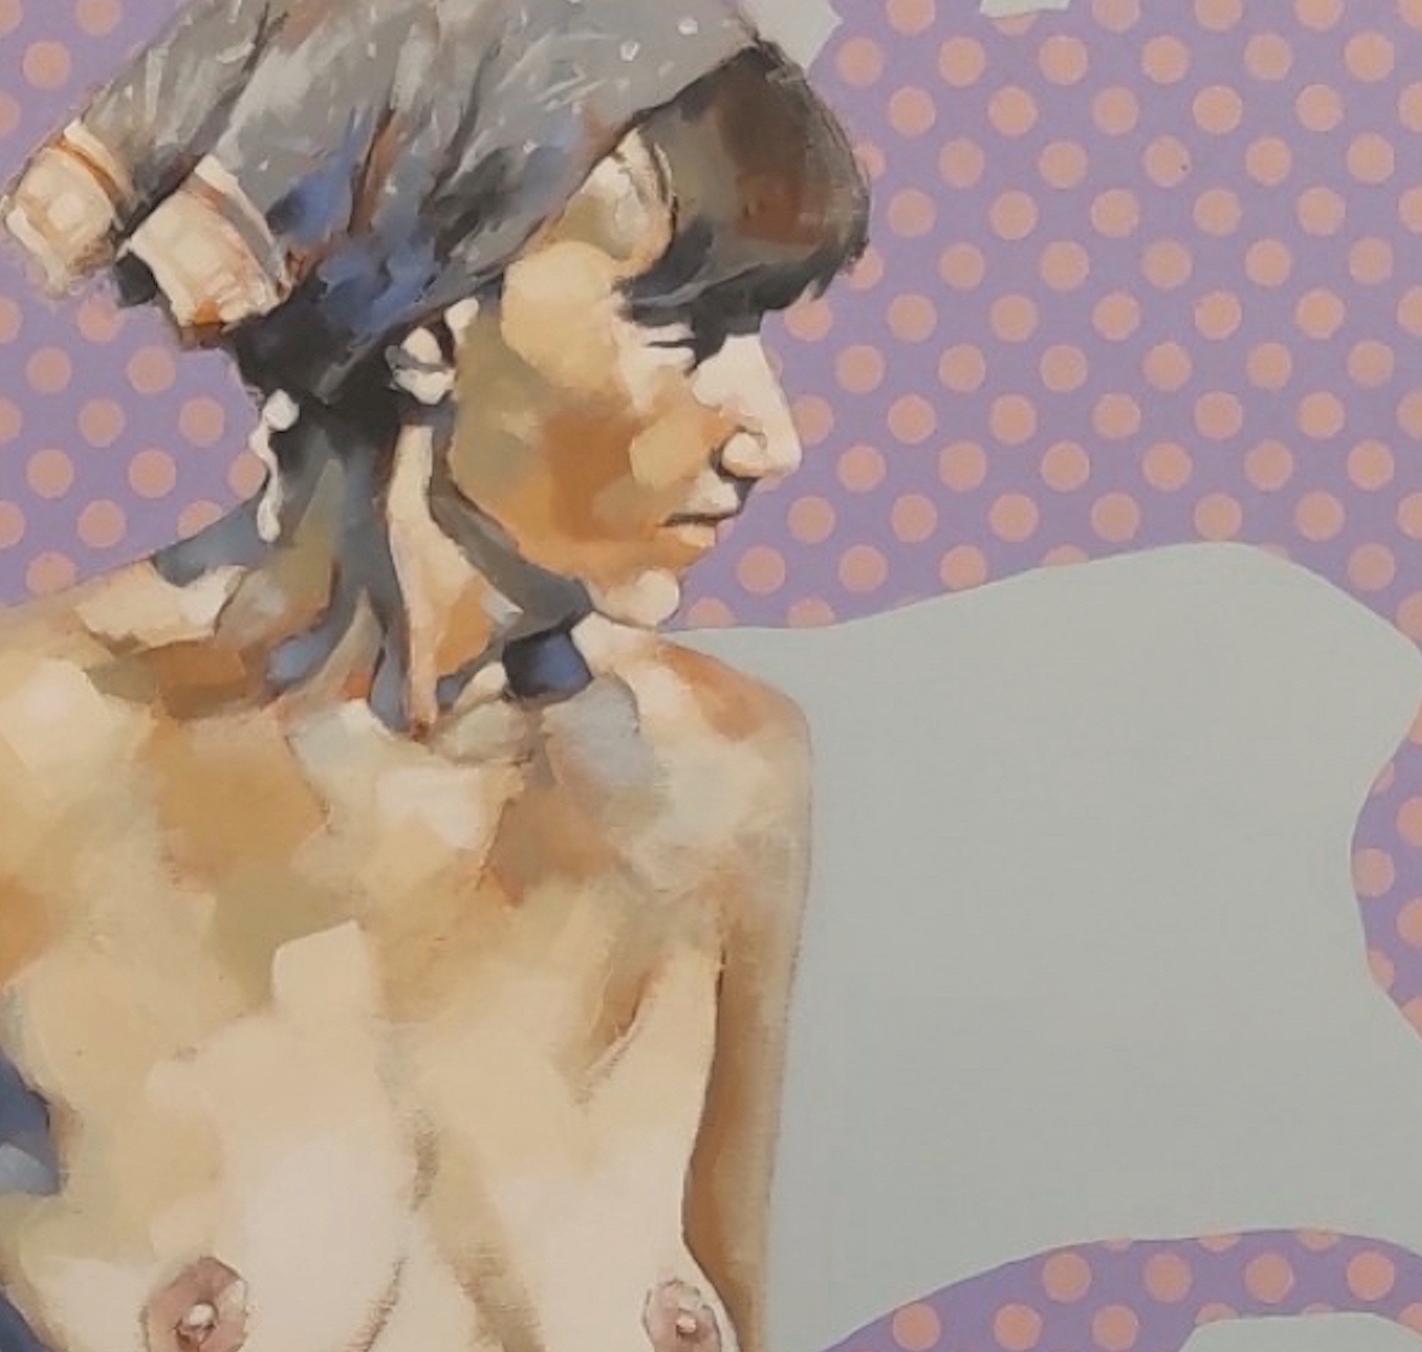 El Pes de la Historia - 21st C, Figurative, Nude, Female body, Feminism, Acrylic - Contemporary Painting by Pep Anton Xaus